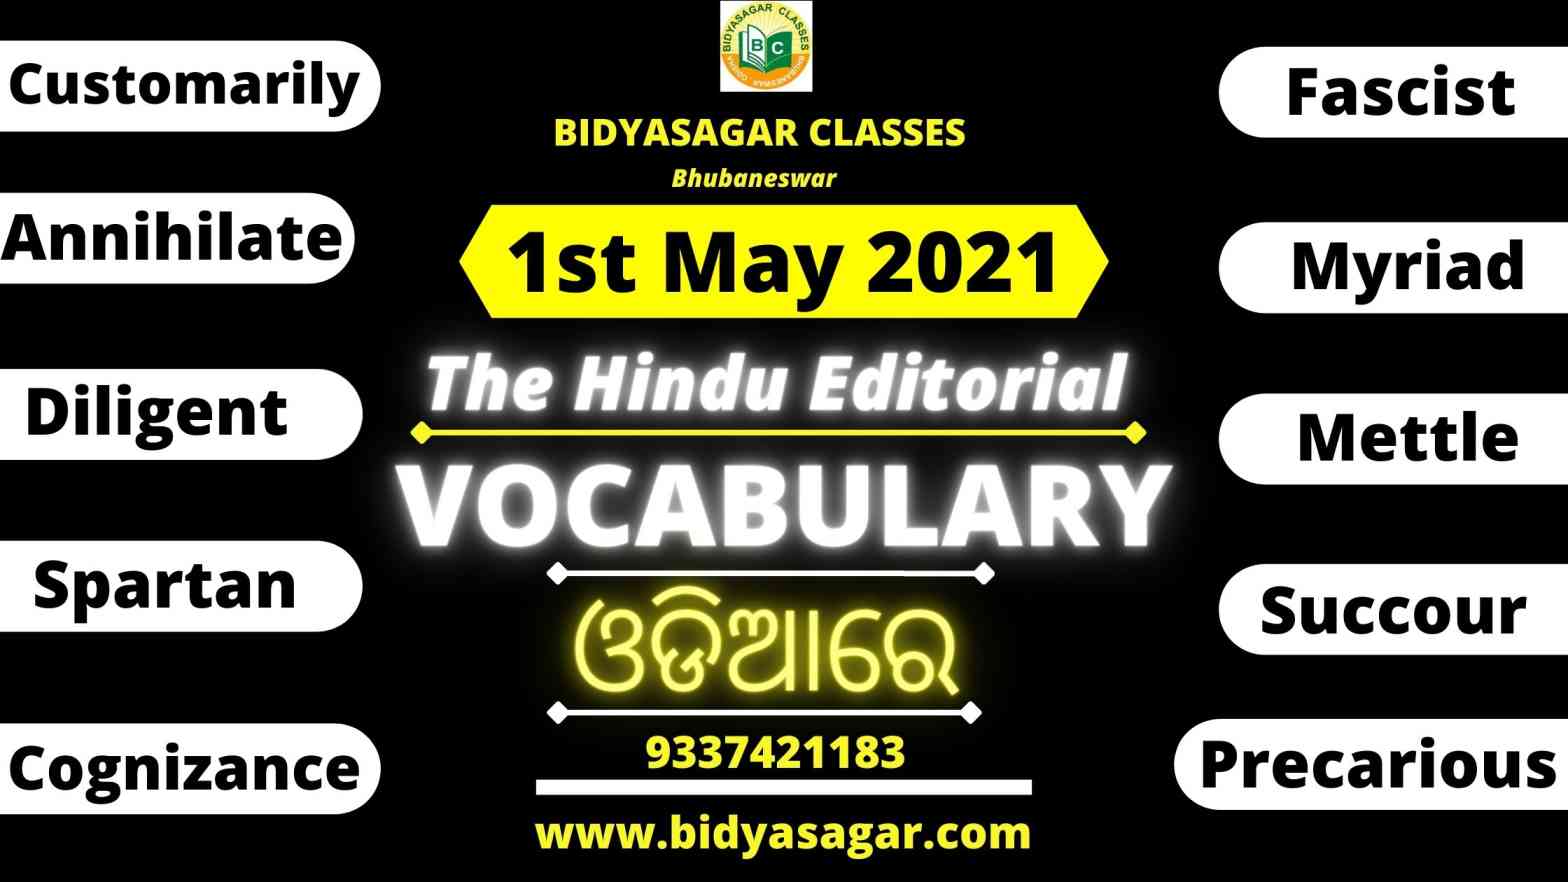 The Hindu Editorial Vocabulary of 1st May 2021 by Bidyasagar Classes,Bhubaneswar